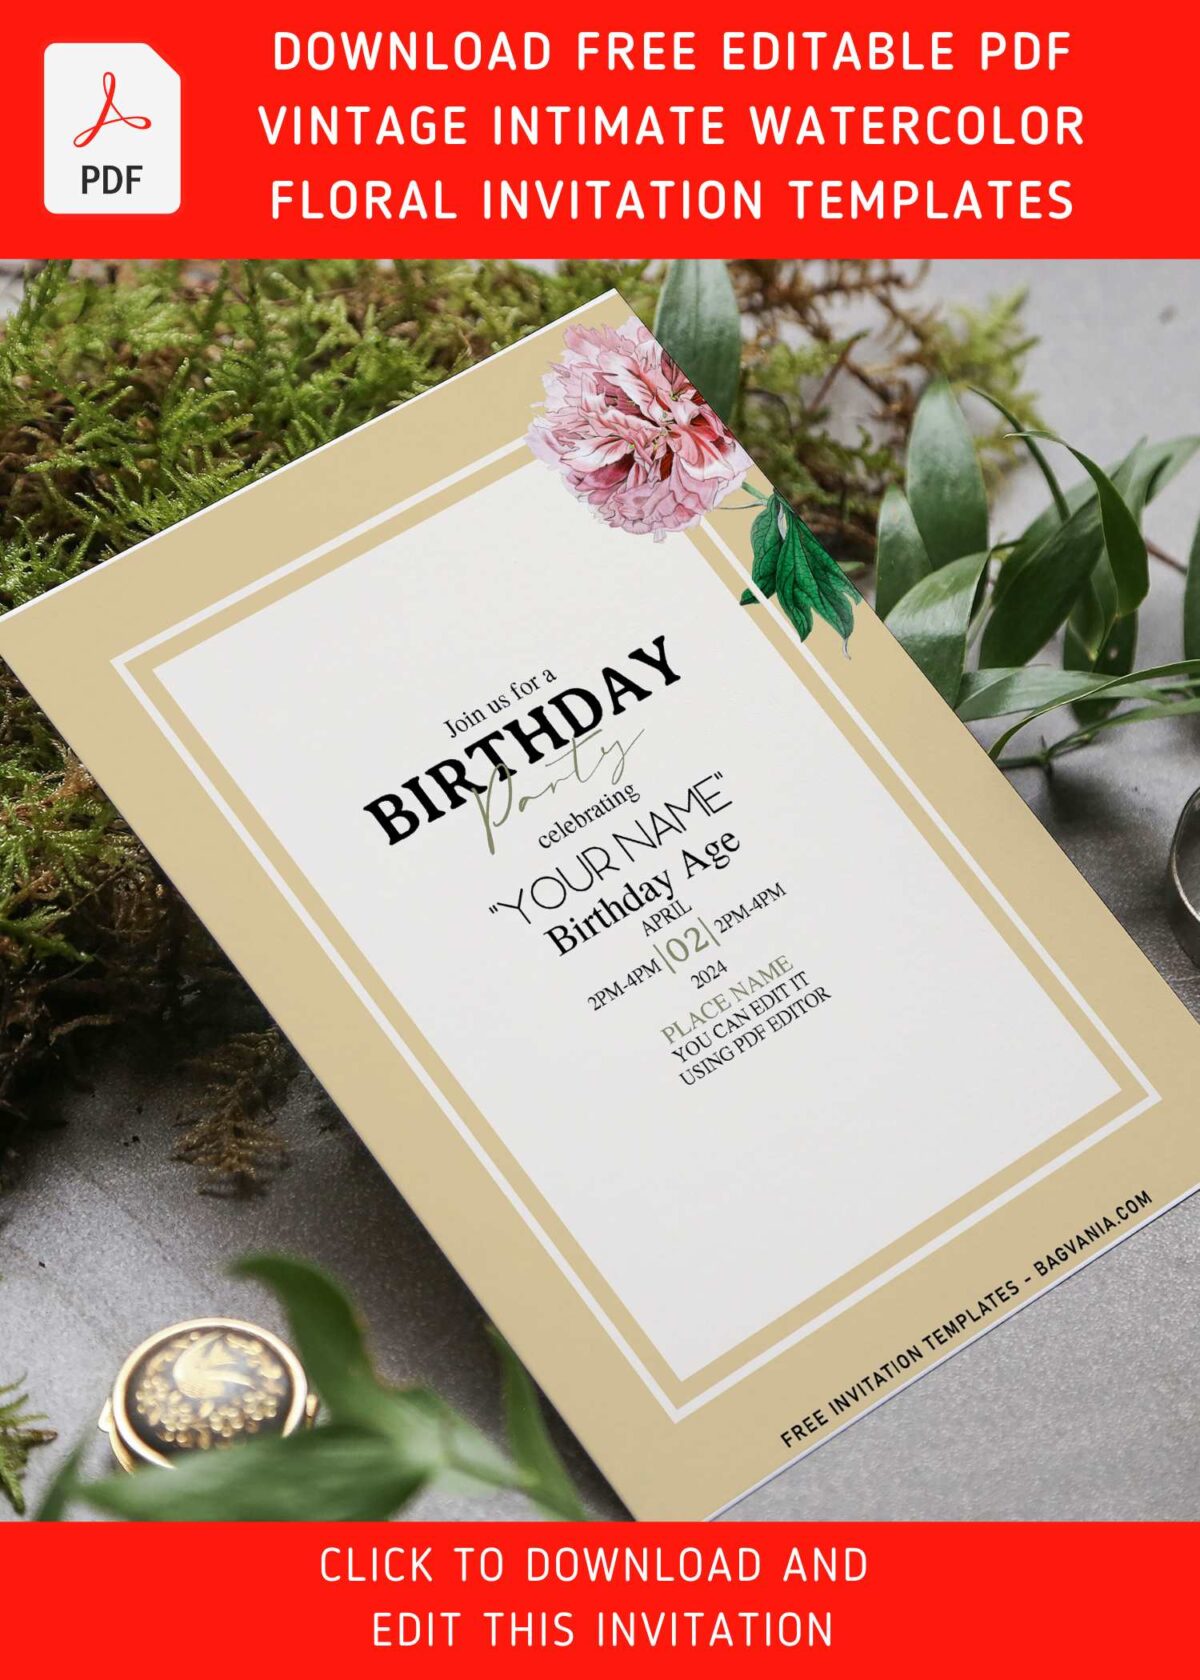 (Free Editable PDF) Intimate Blush Paper Blooms Birthday Invitation Templates with green foliage